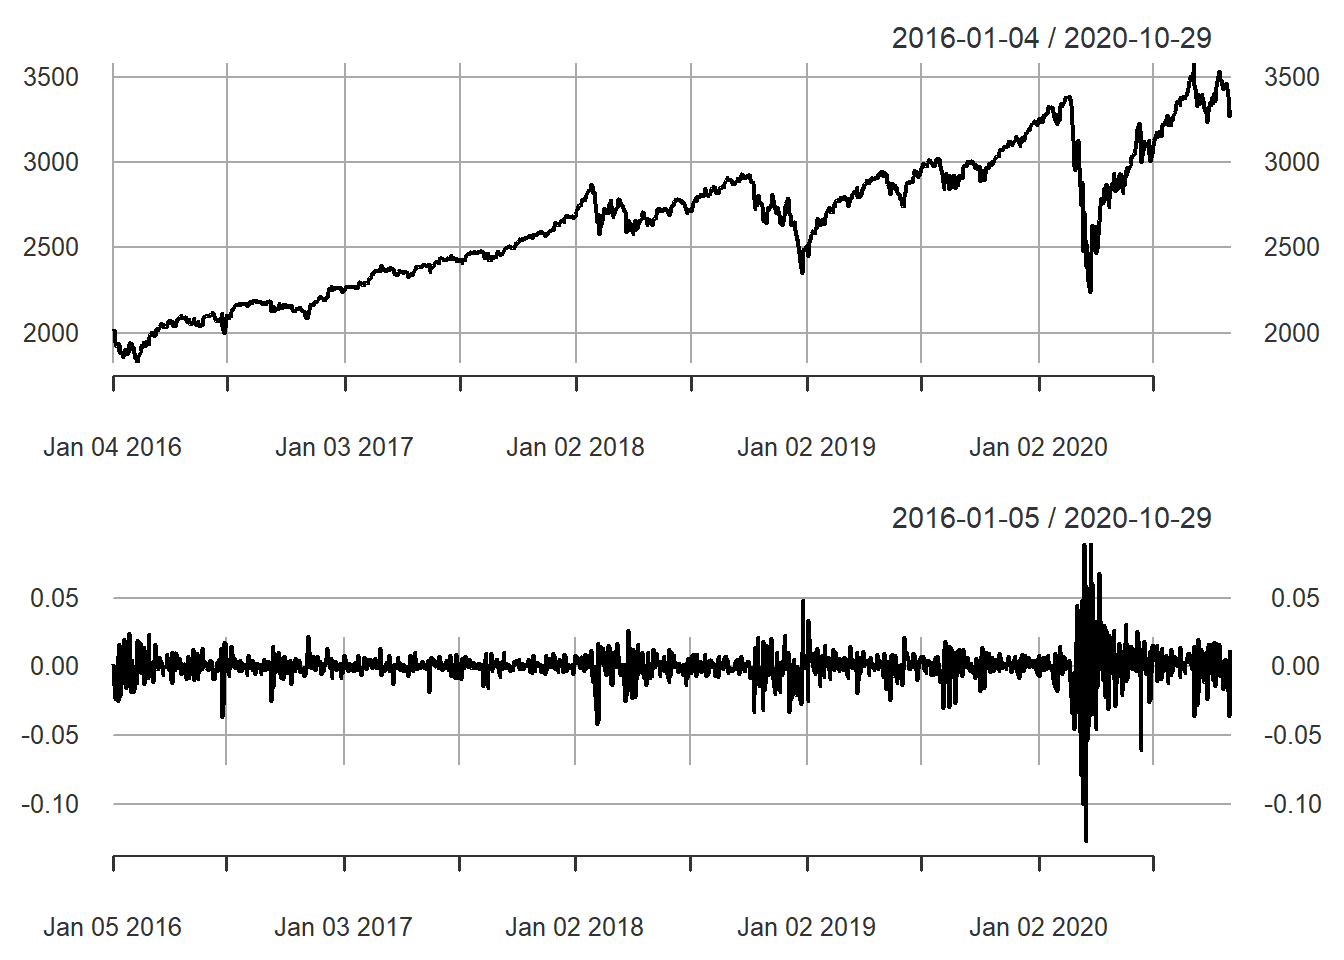 S&P 500 price and log return